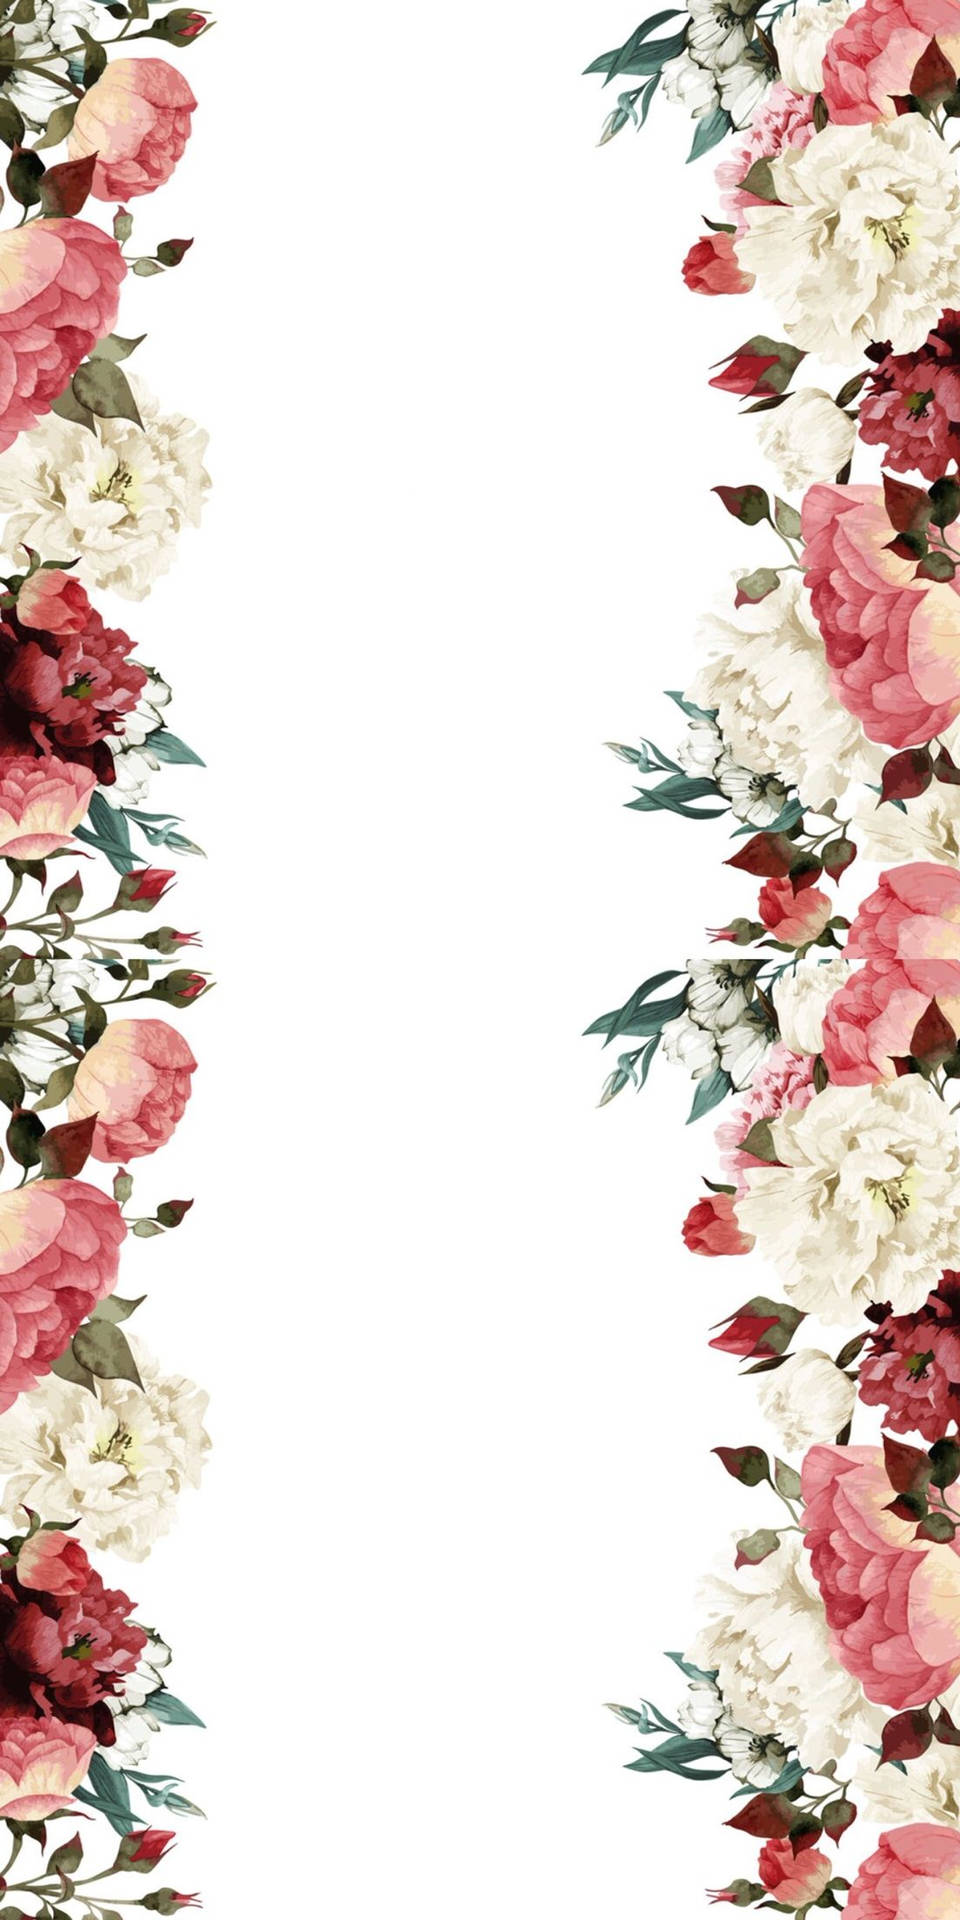 Border Floral Iphone Wallpaper